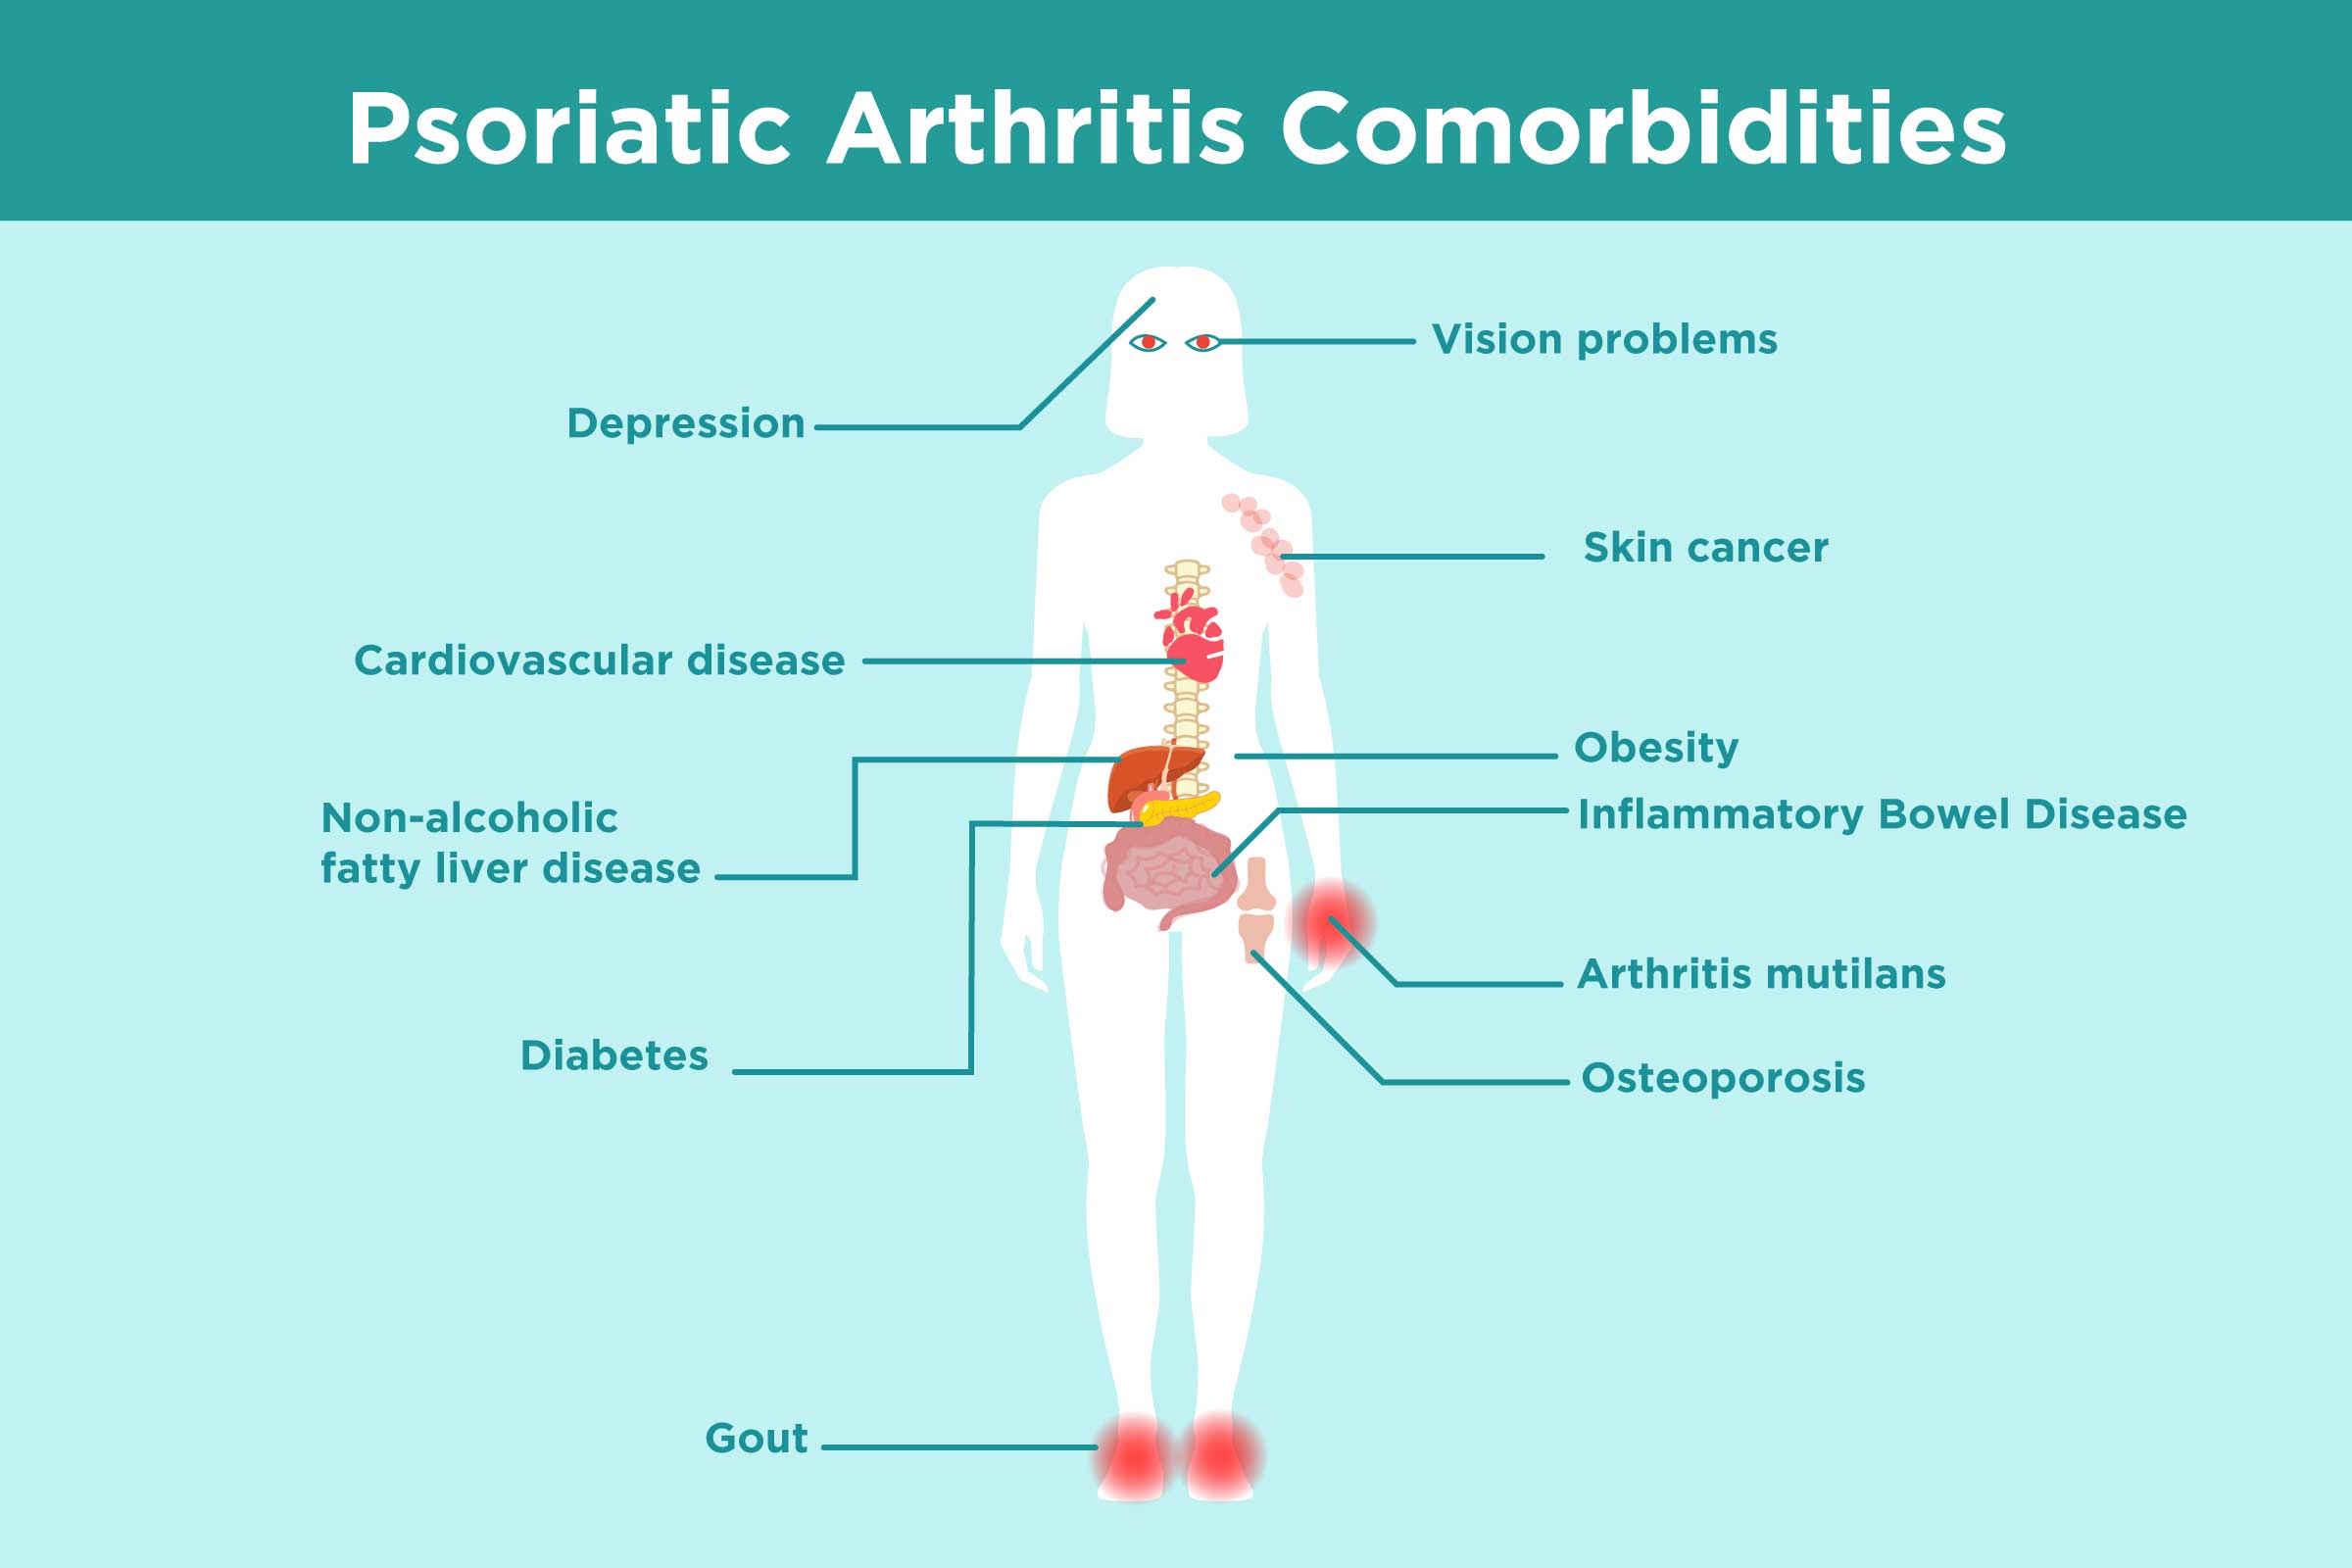 Psoriatic Arthritis Comorbidities: What Patients Need to Know